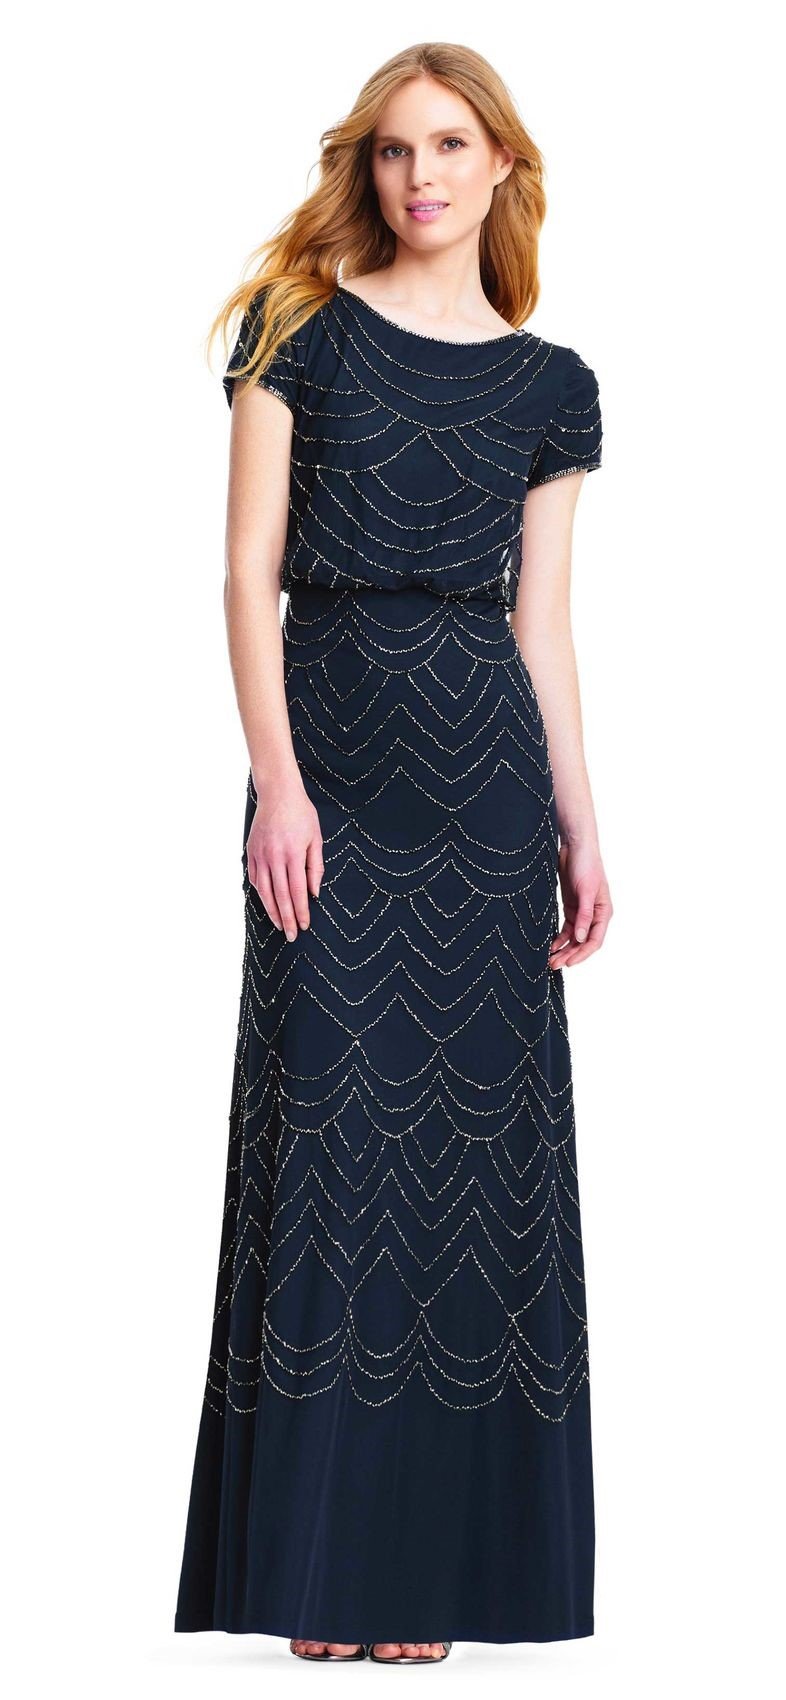 Adrianna Papell Tan Beaded Gown Dress Cap Sleeve V-Neck Waist Band Size 2  $300 | eBay